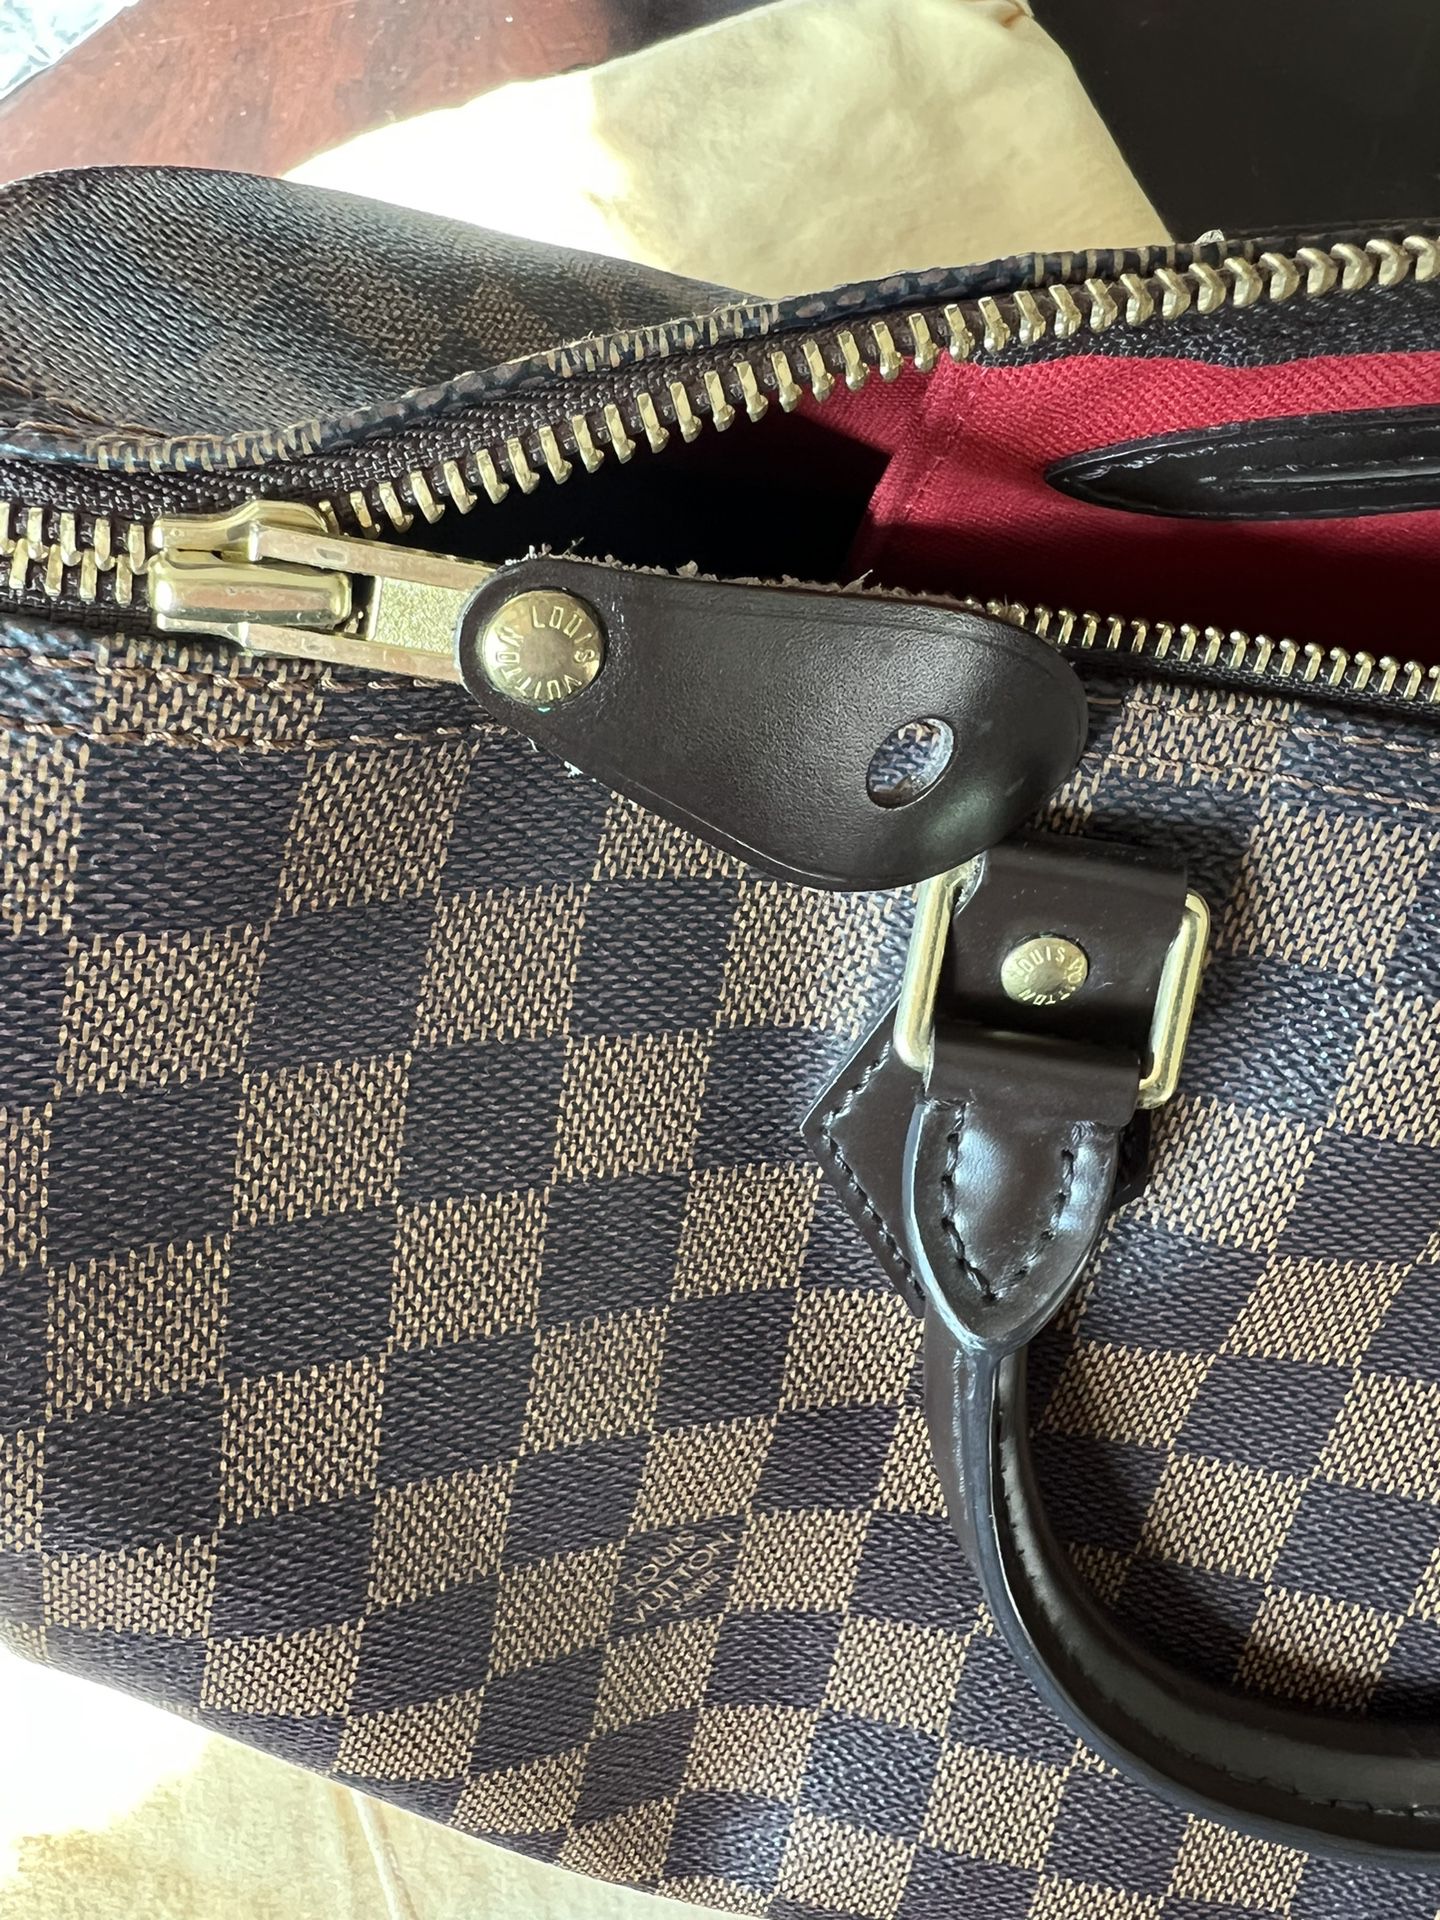 Louis Vuitton SPeedy 35 Handbag for Sale in Sunnyvale, CA - OfferUp